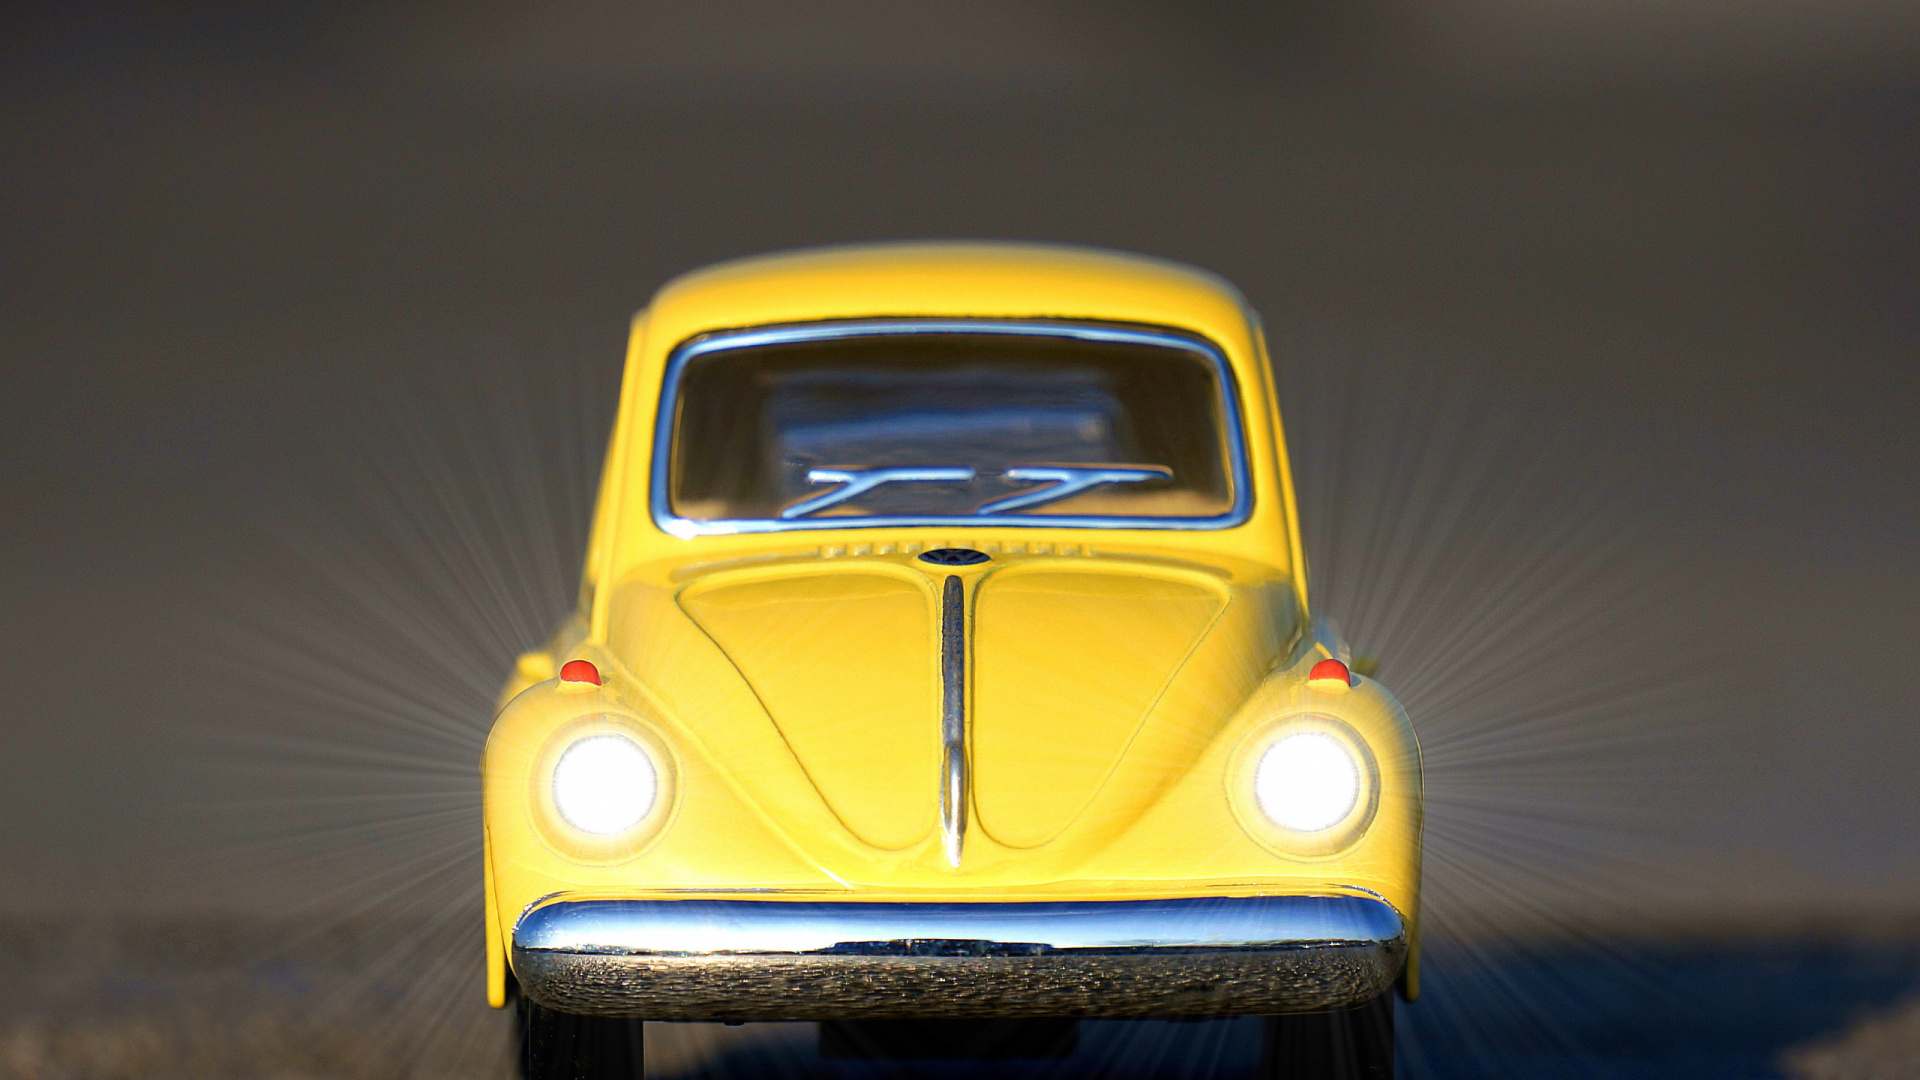 Yellow Volkswagen Beetle on Black Wooden Surface. Wallpaper in 1920x1080 Resolution